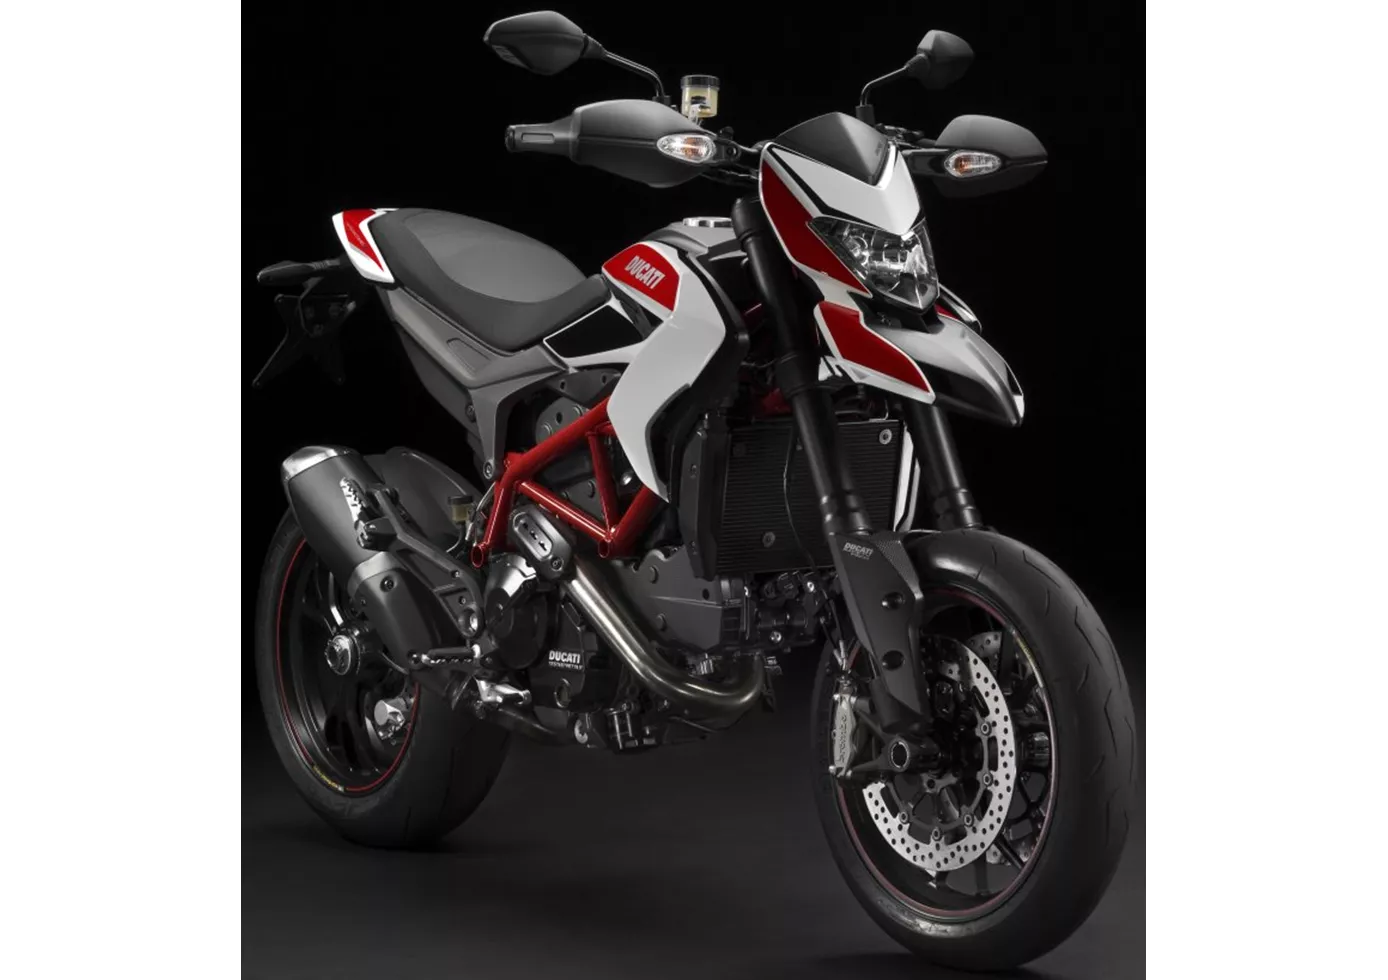 Ducati Hypermotard SP 821 2014